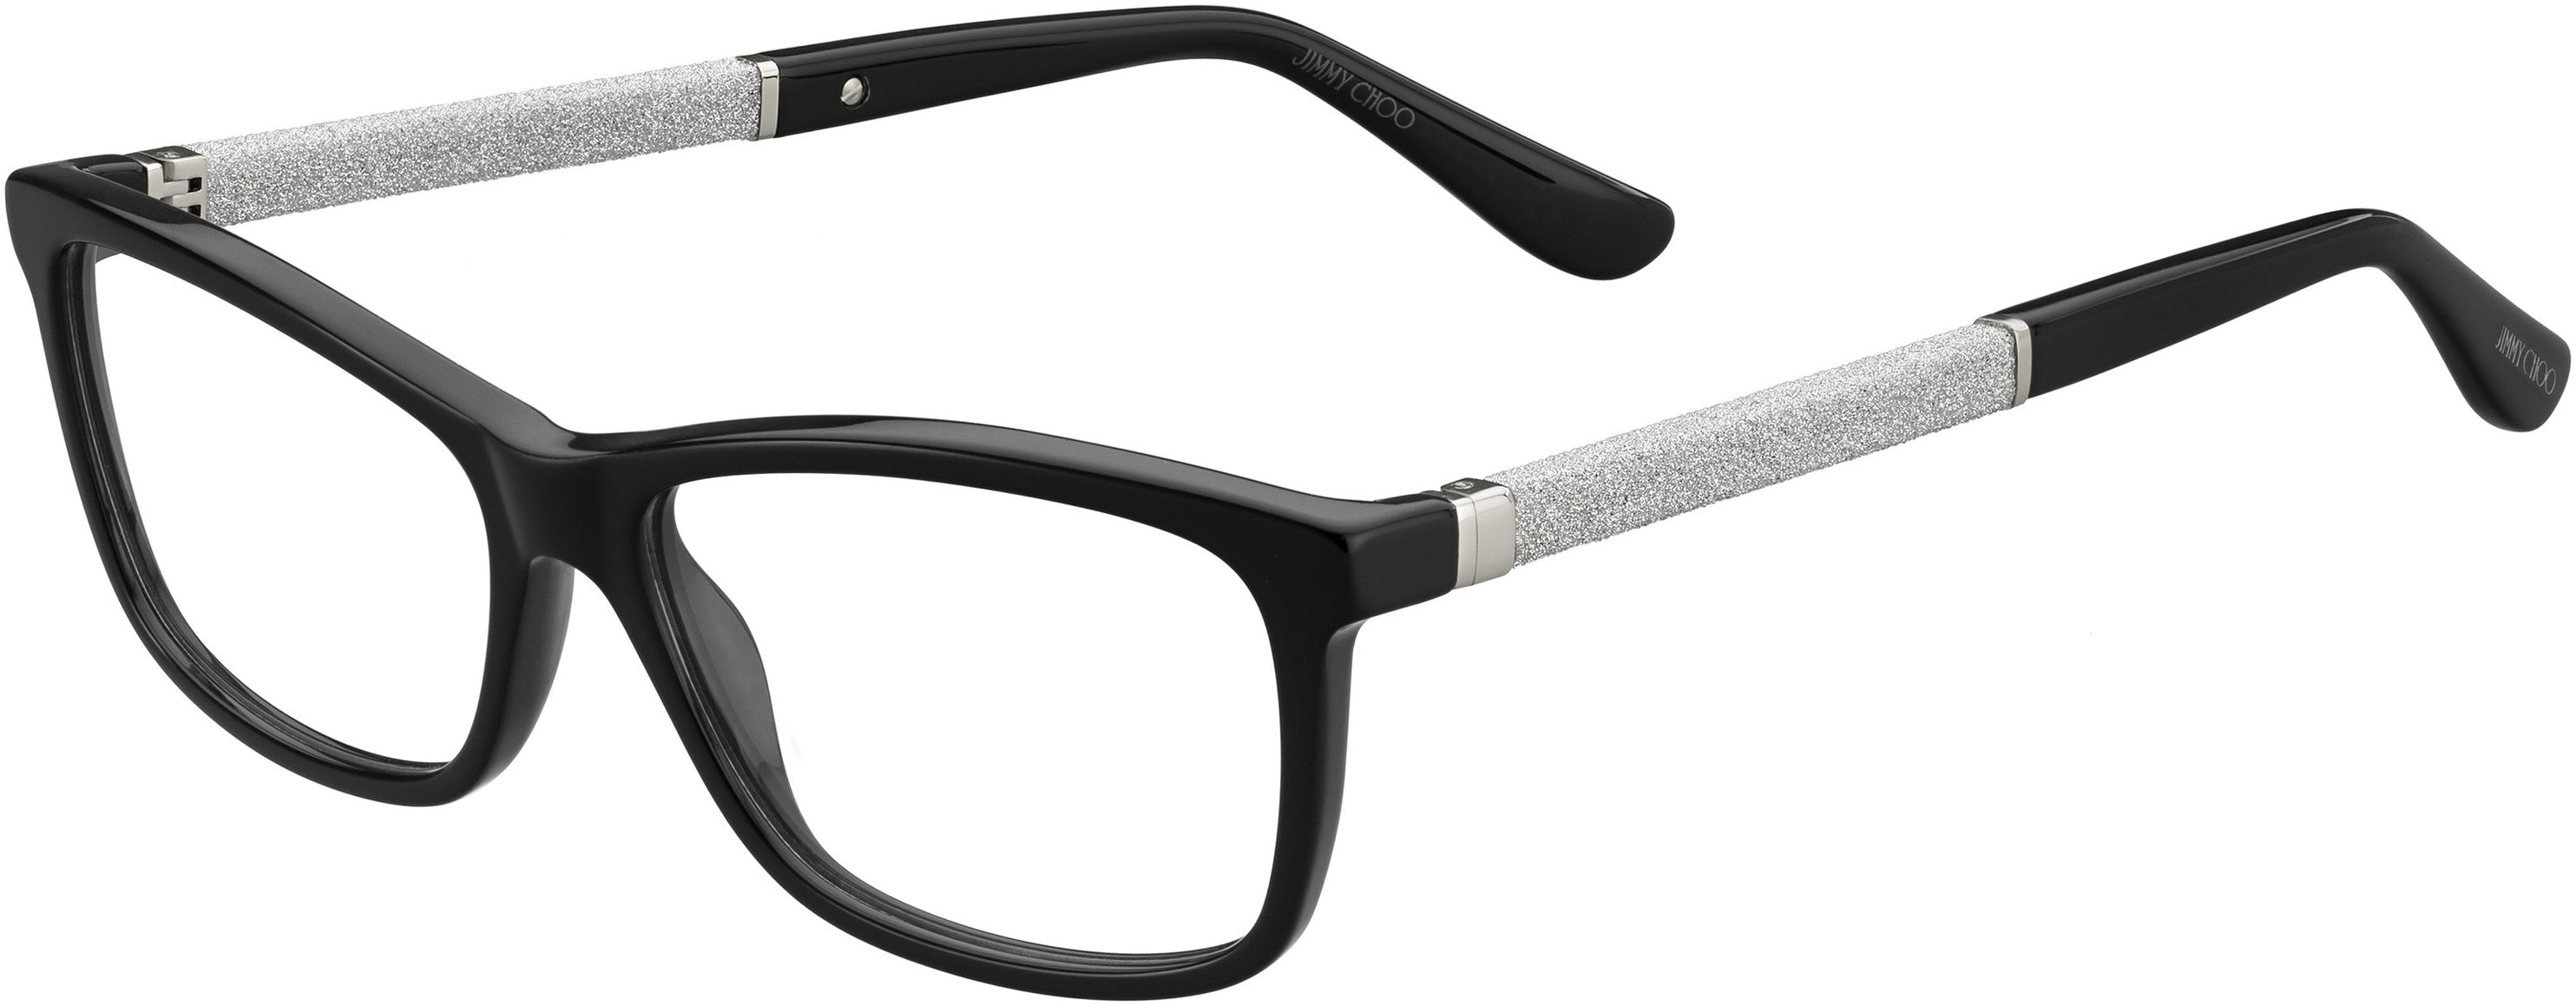  Jimmy Choo 167 Rectangular Eyeglasses 0FA3-0FA3  Black Glitter Black (00 Demo Lens)